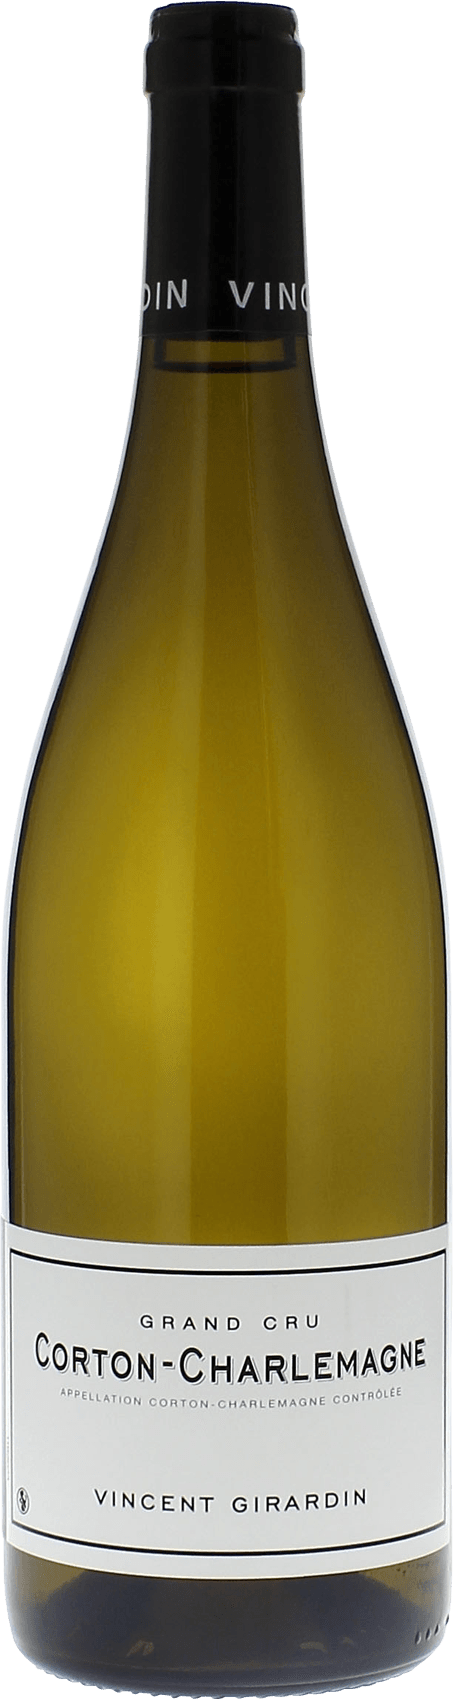 Corton charlemagne grand cru 2015 Domaine GIRARDIN Vincent, Bourgogne blanc